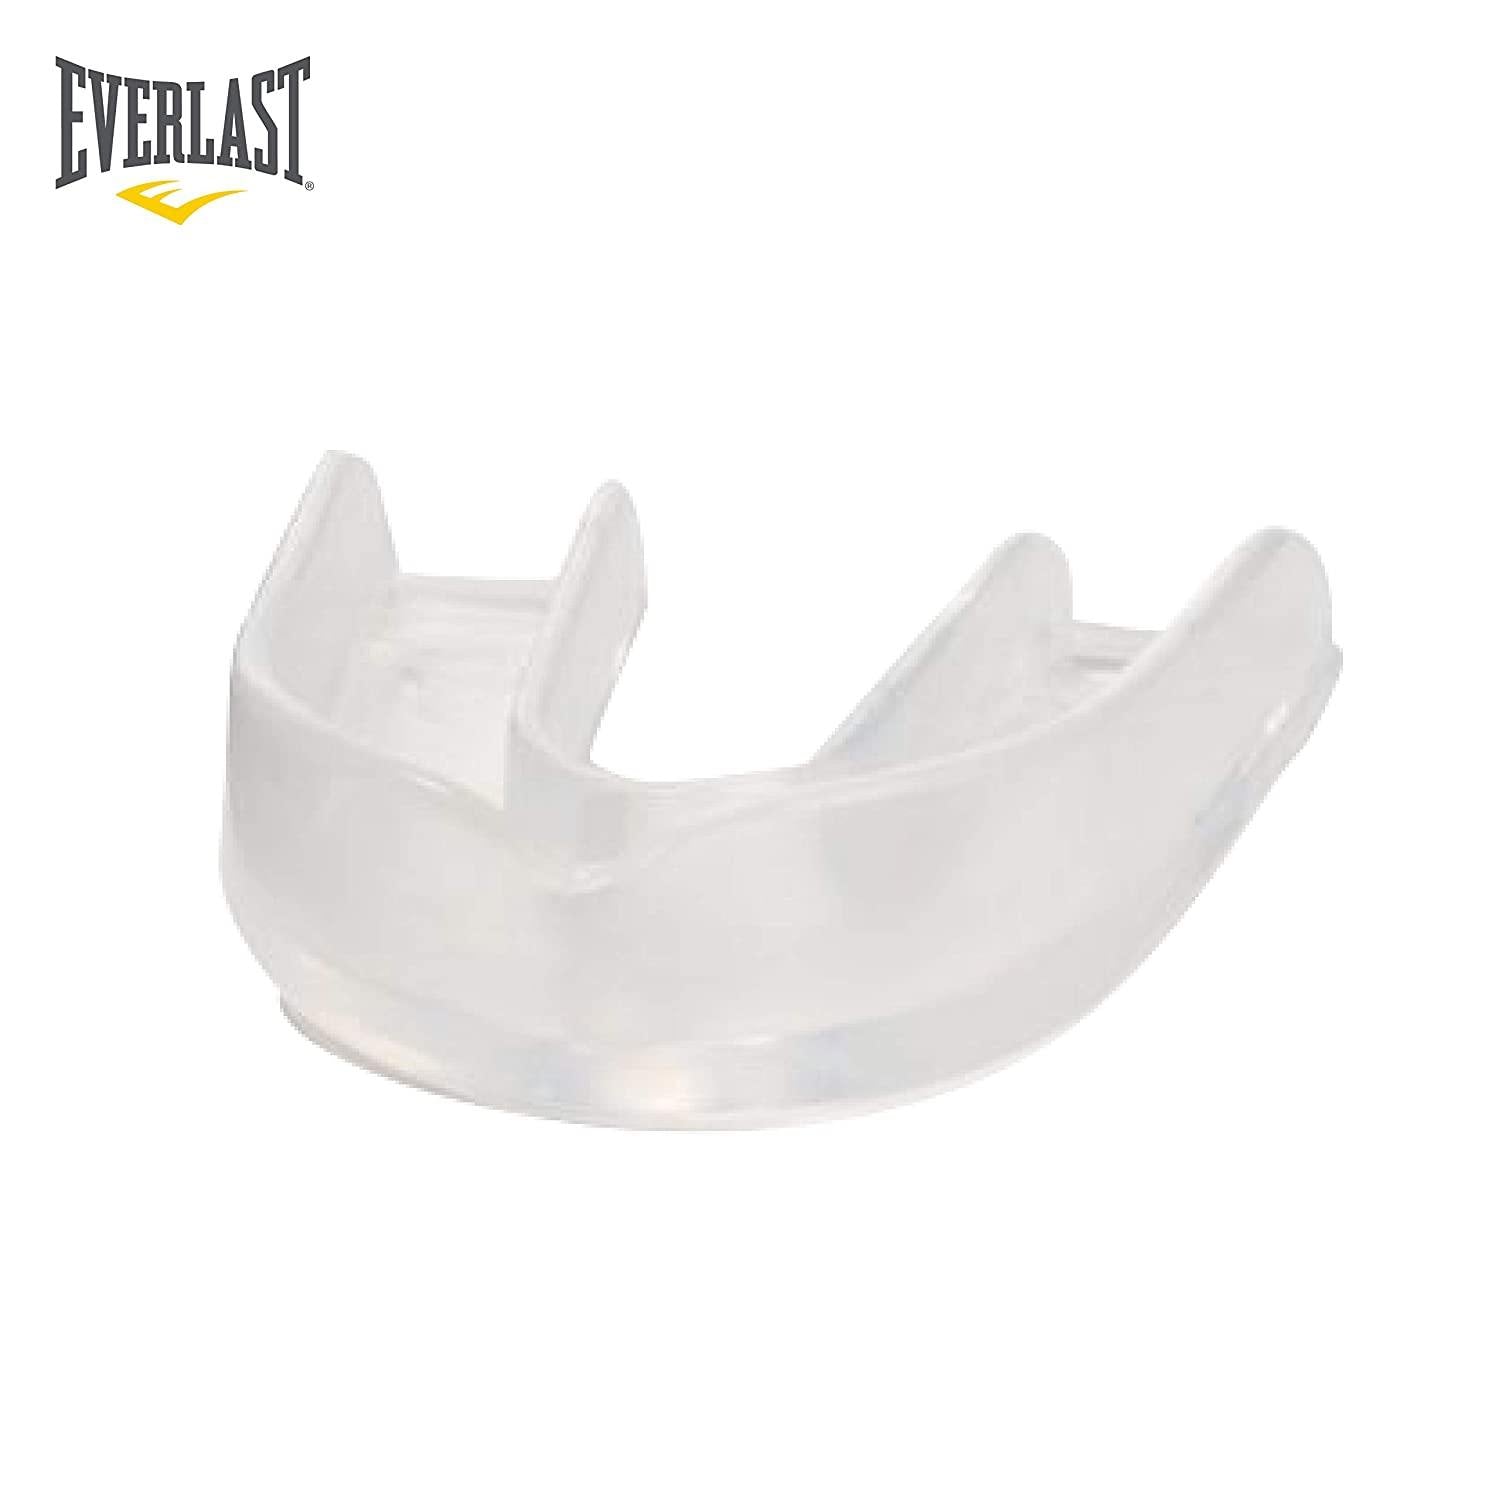 Everlast 4405E Single Mouth Guard - Best Price online Prokicksports.com